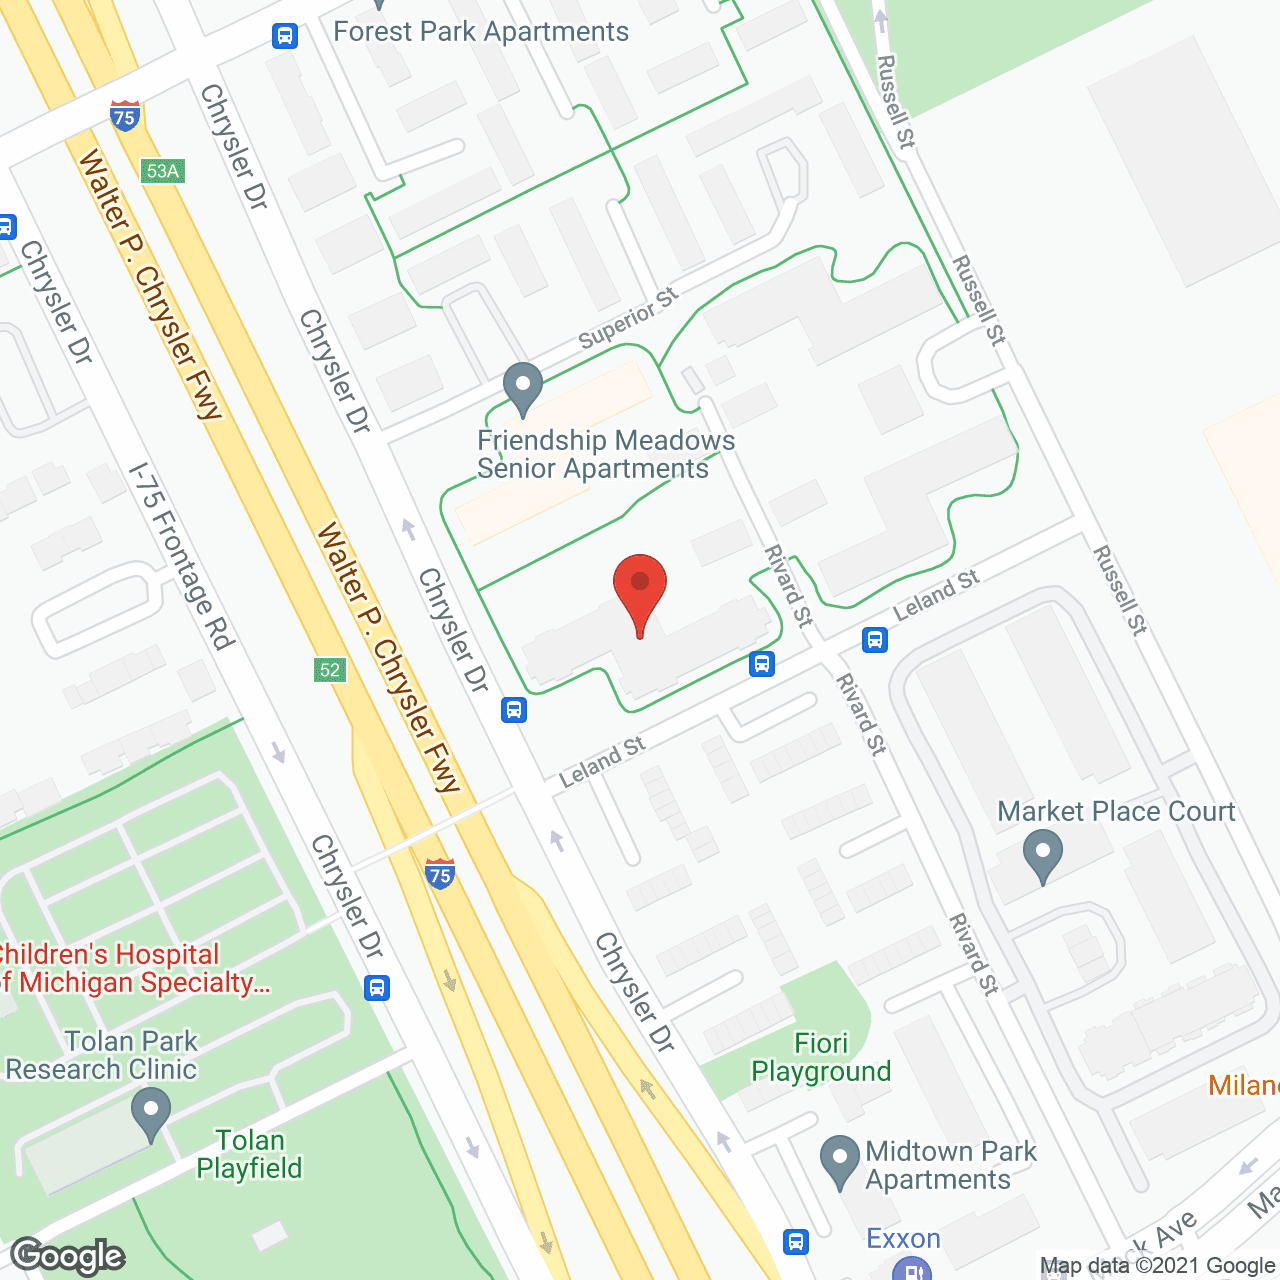 Friendship Meadows in google map